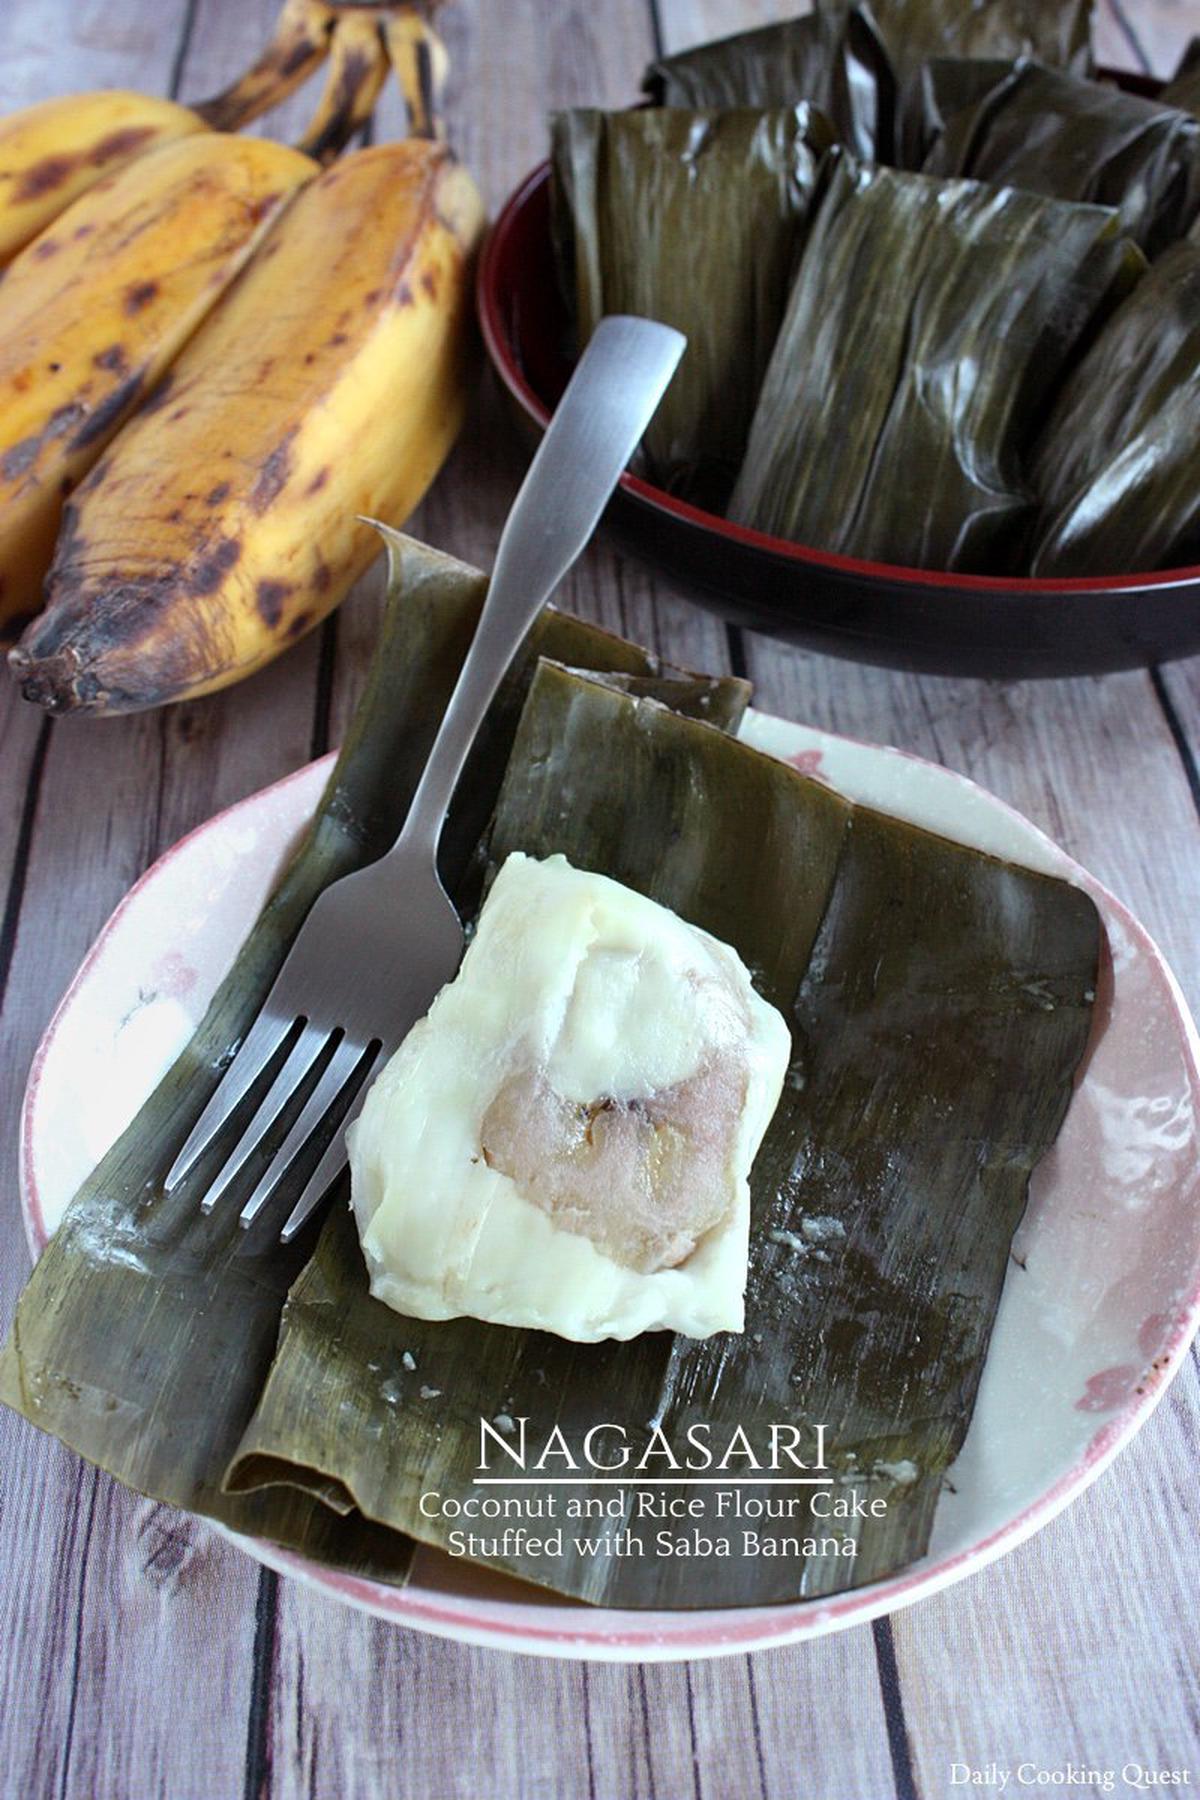 Nagasari - Coconut and Rice Flour Cake Stuffed with Saba Banana